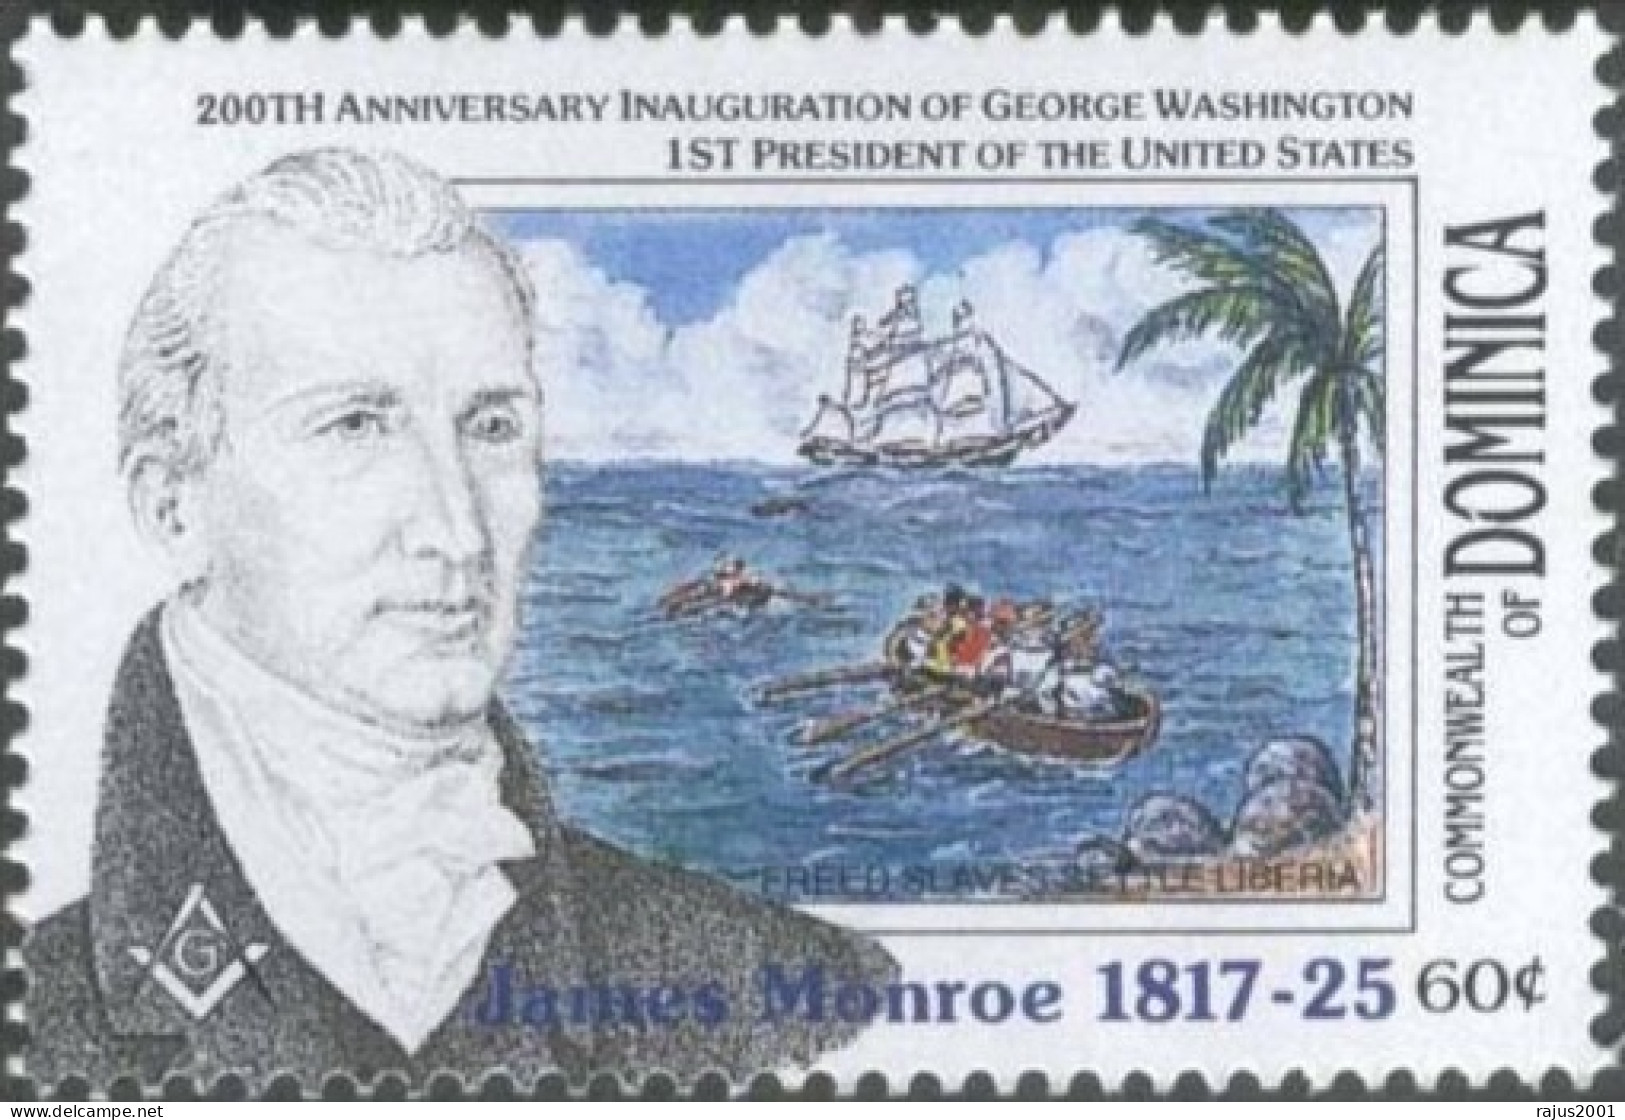 James Monroe, 5th American President, Williamsburg Lodge, Freemasonry, Freed Slaves Settlement Liberia, MNH Dominica - Freemasonry